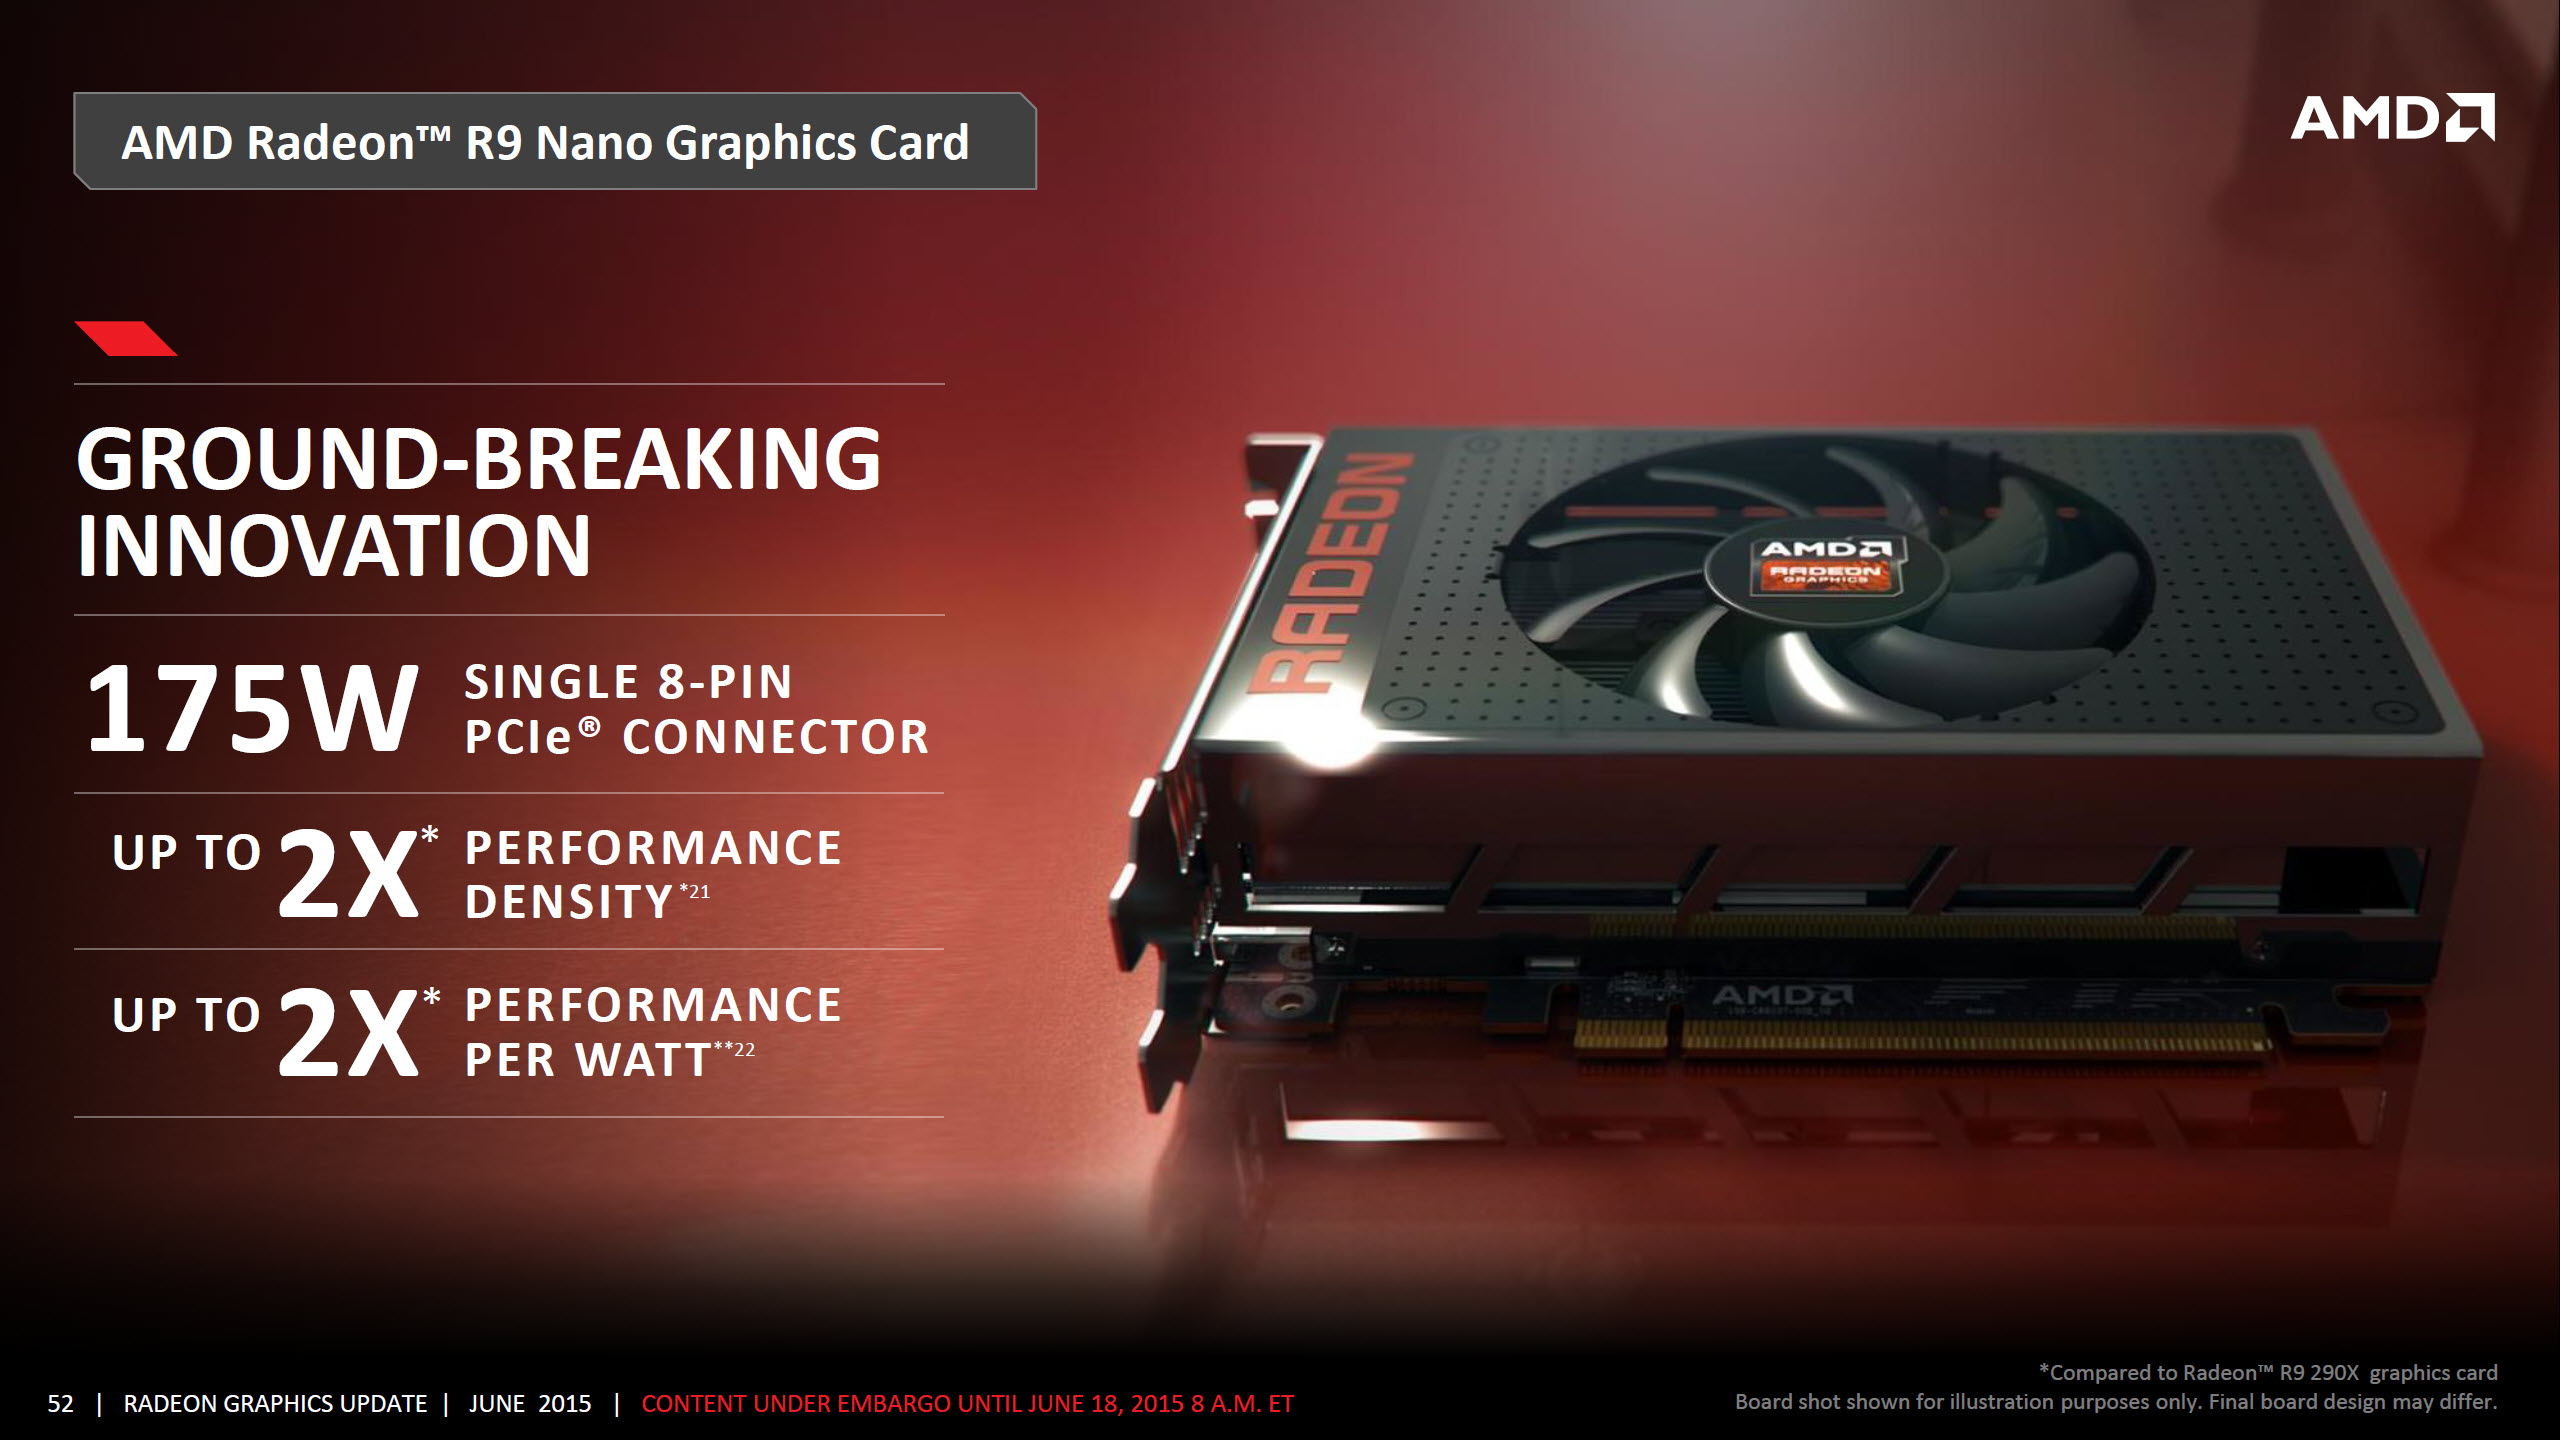 ASUS are making a white R9 Nano GPU